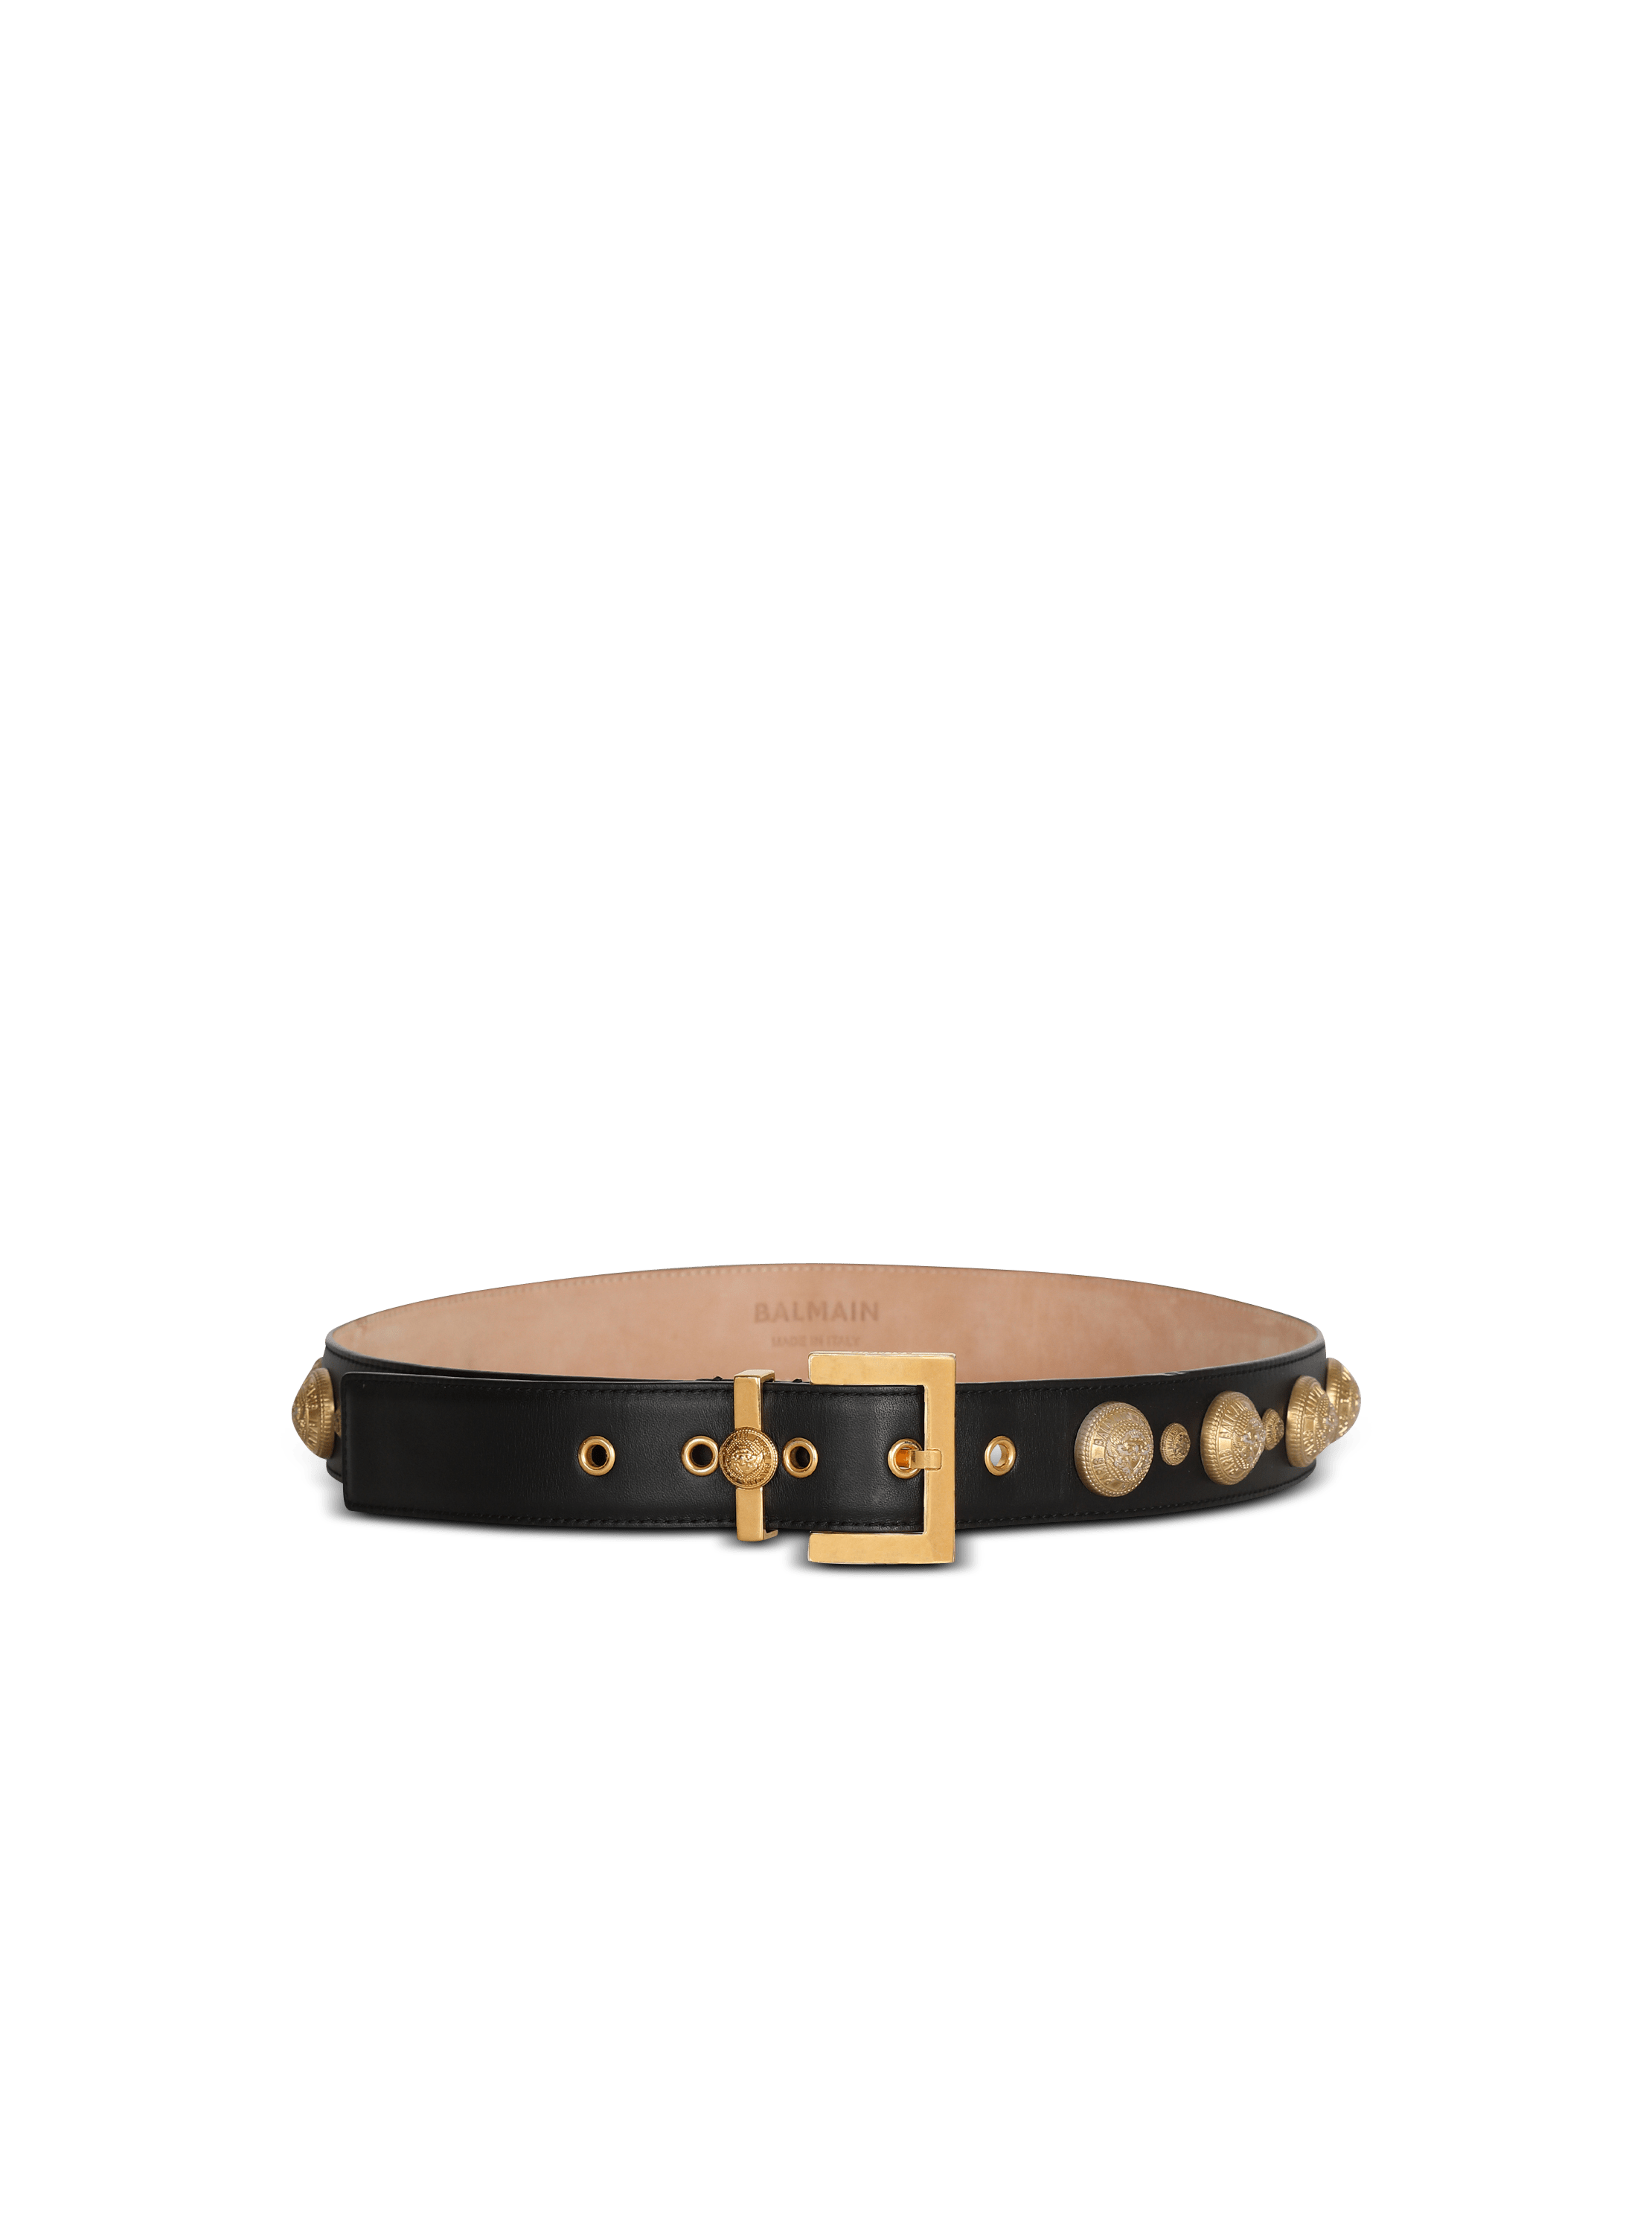 Leather Coin Belt belt black - Women